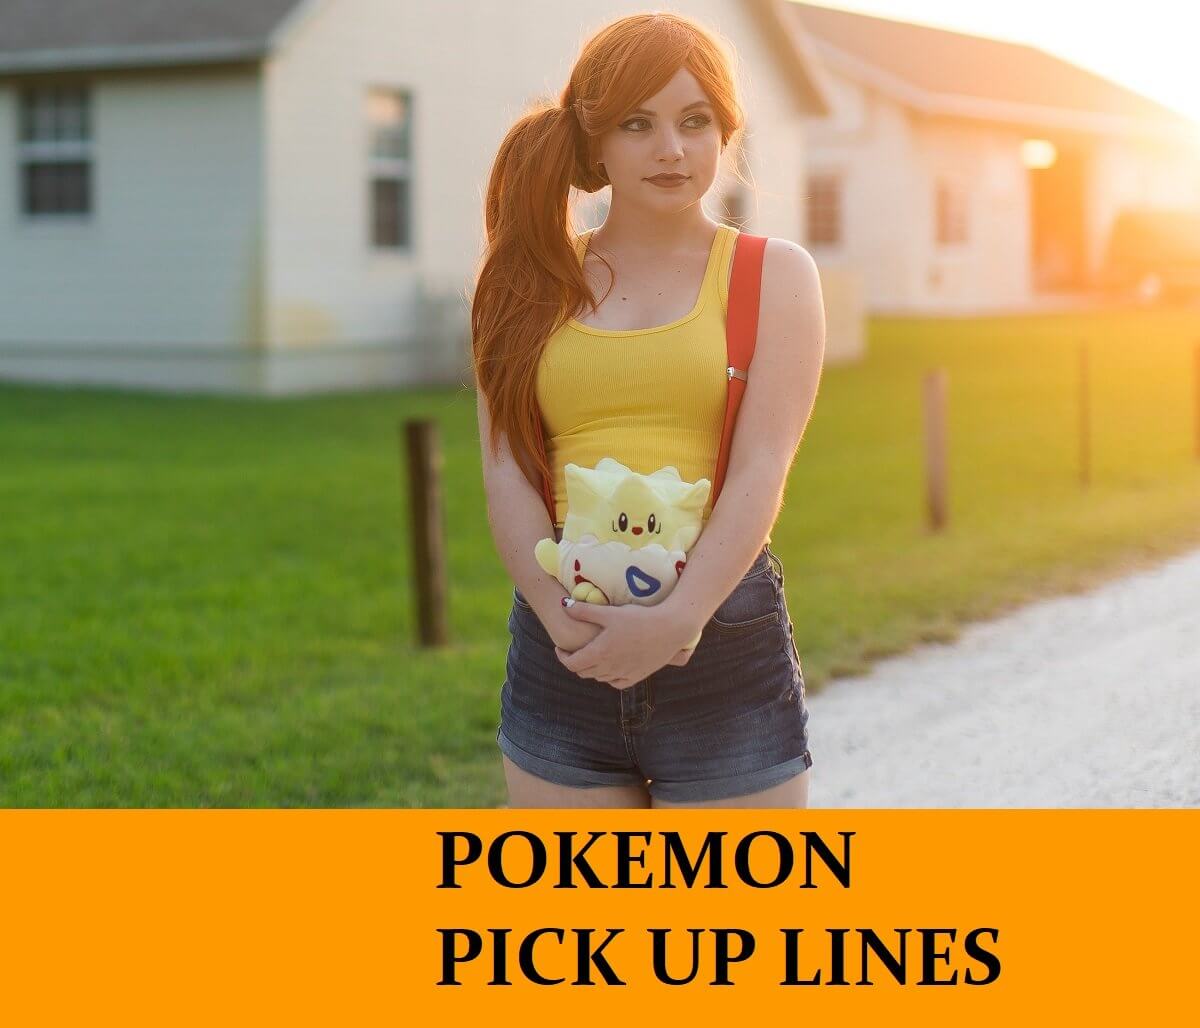 Pick Up Lines Based on Pokemon